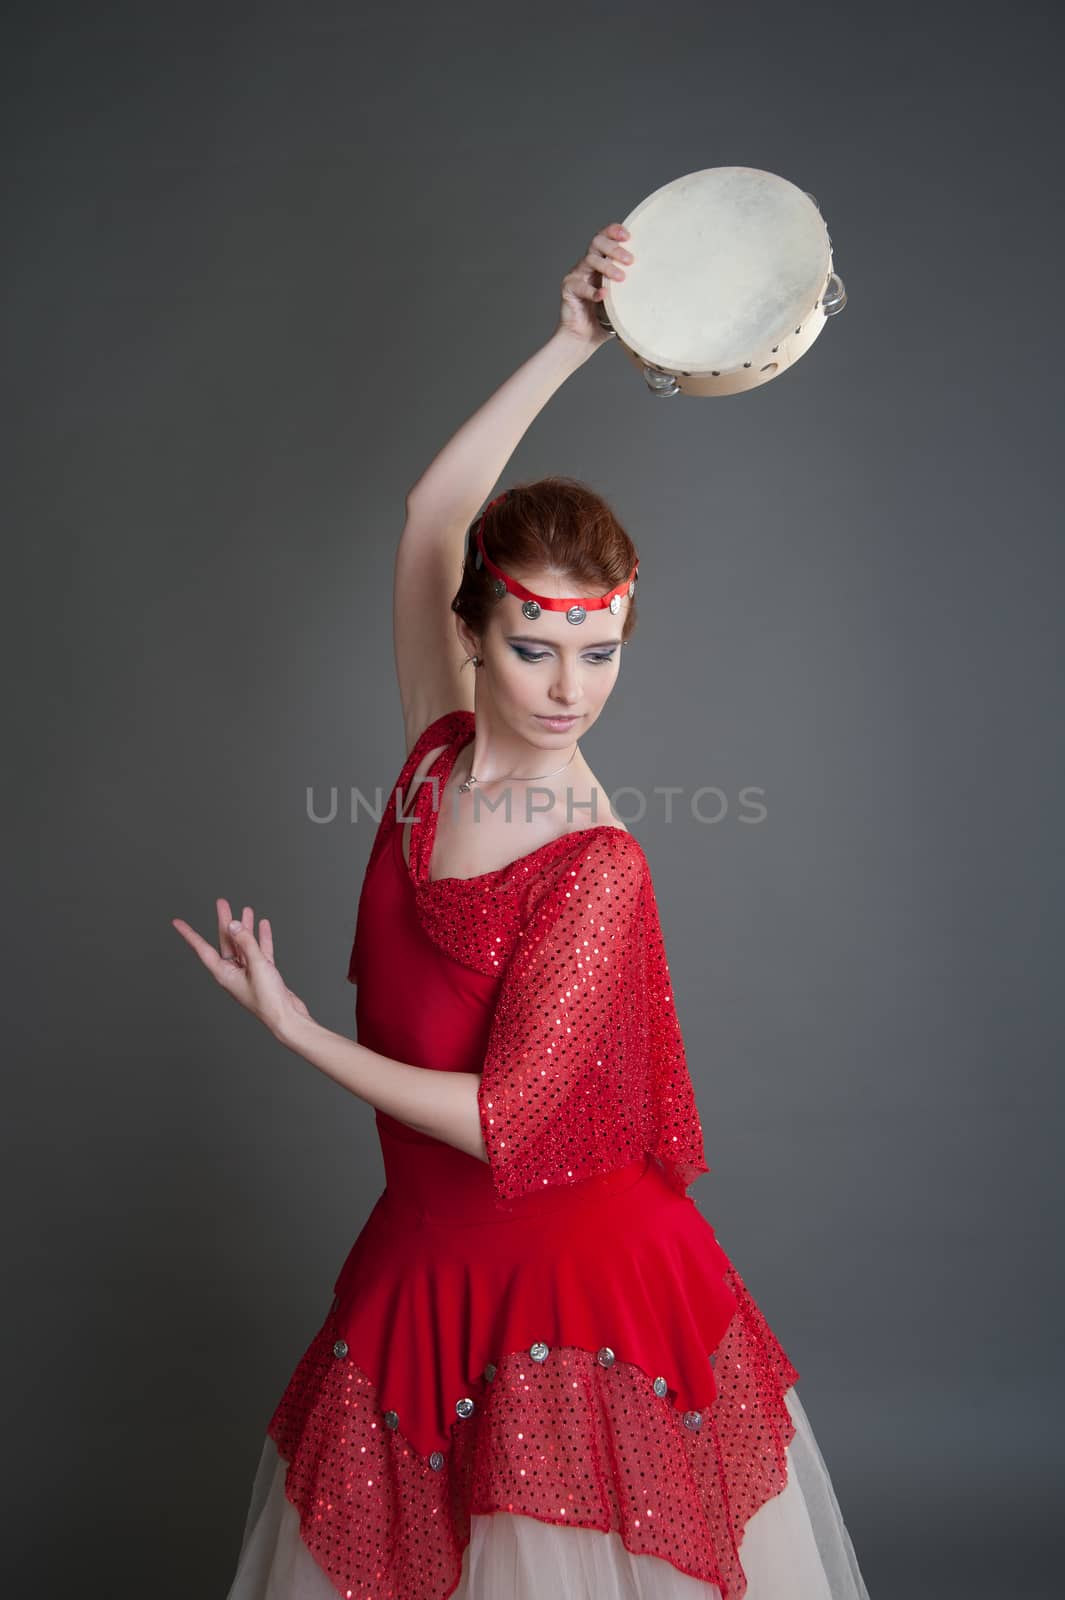 dancer with a tambourine by raduga21